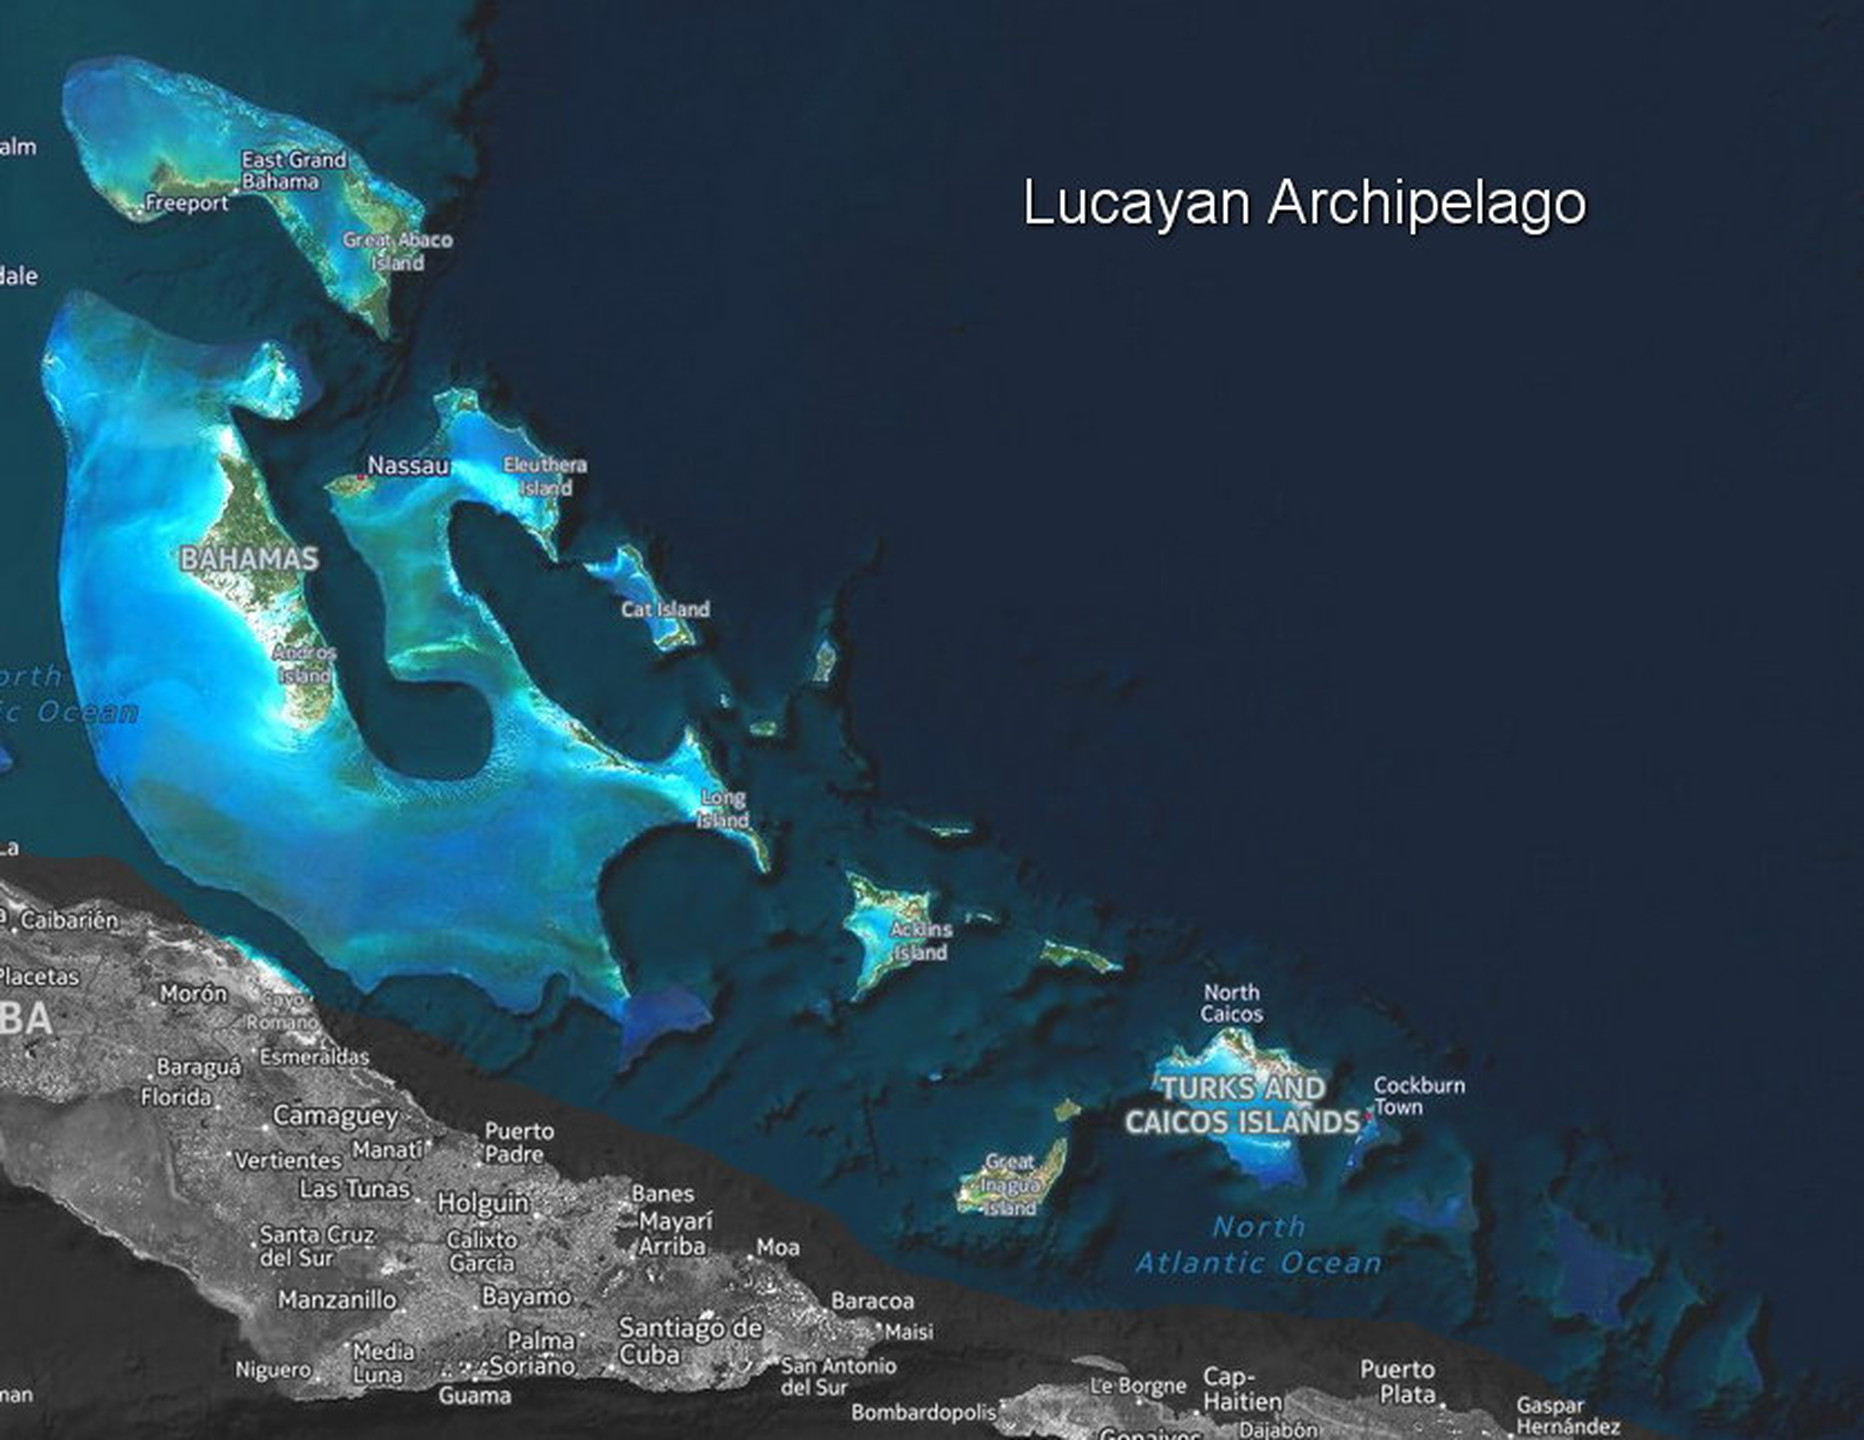 The Lucayan Archipelago map